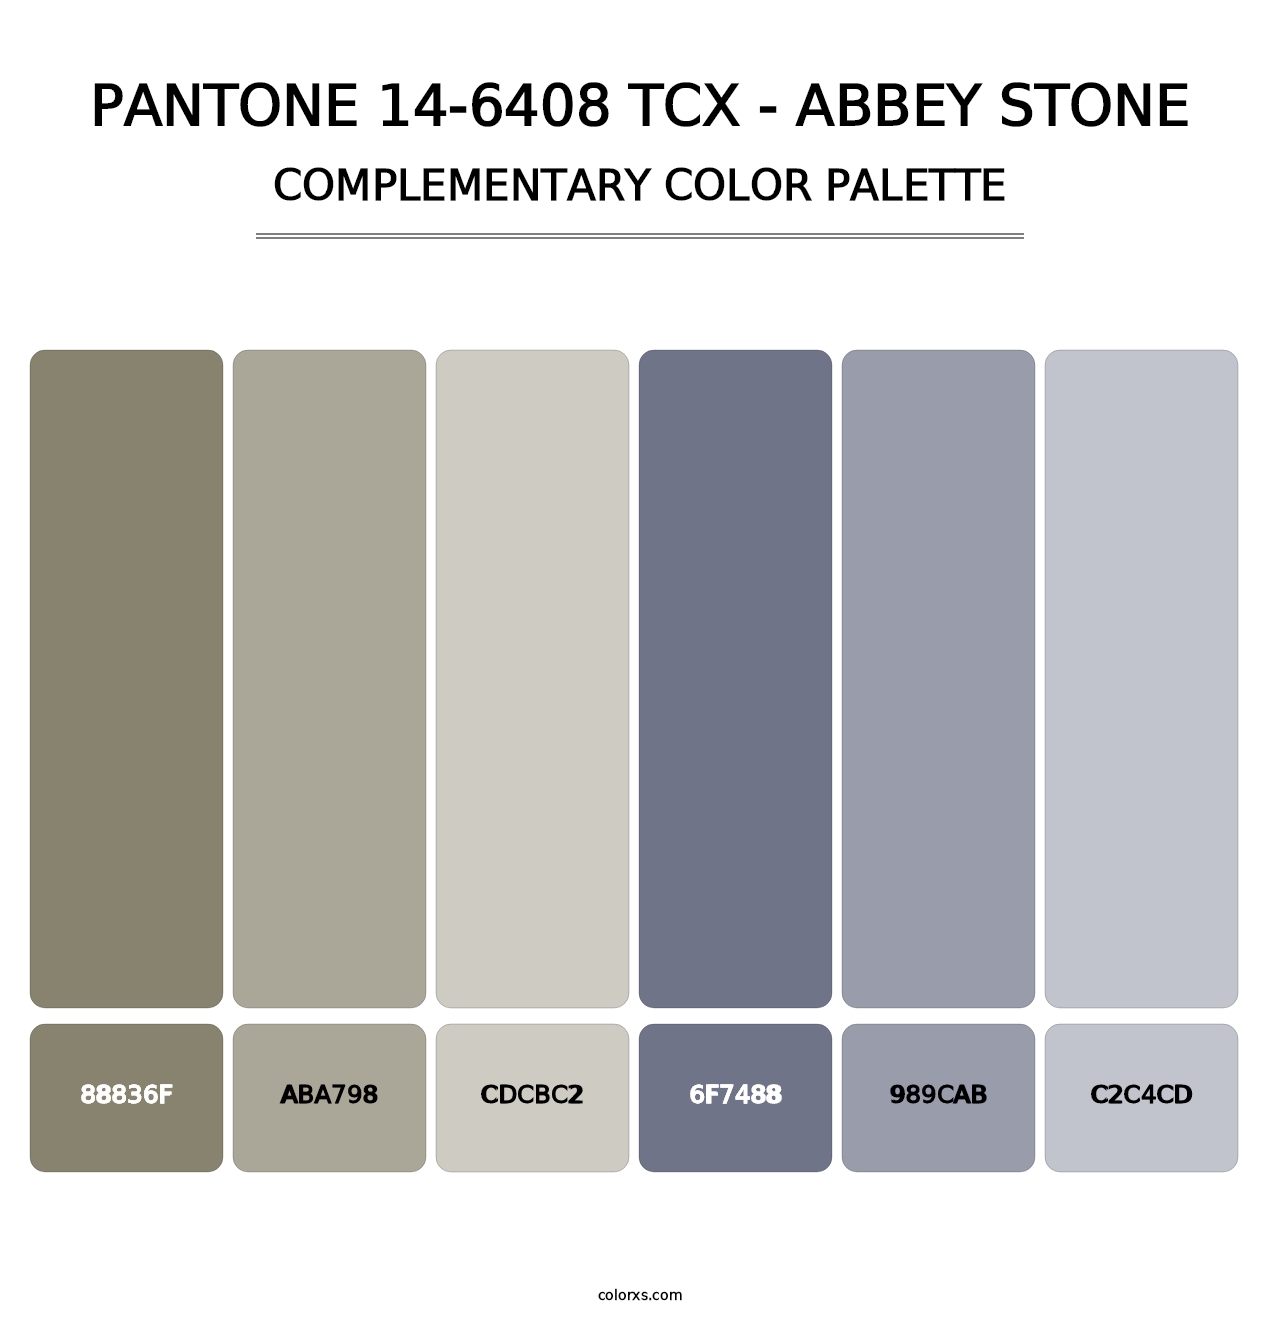 PANTONE 14-6408 TCX - Abbey Stone - Complementary Color Palette